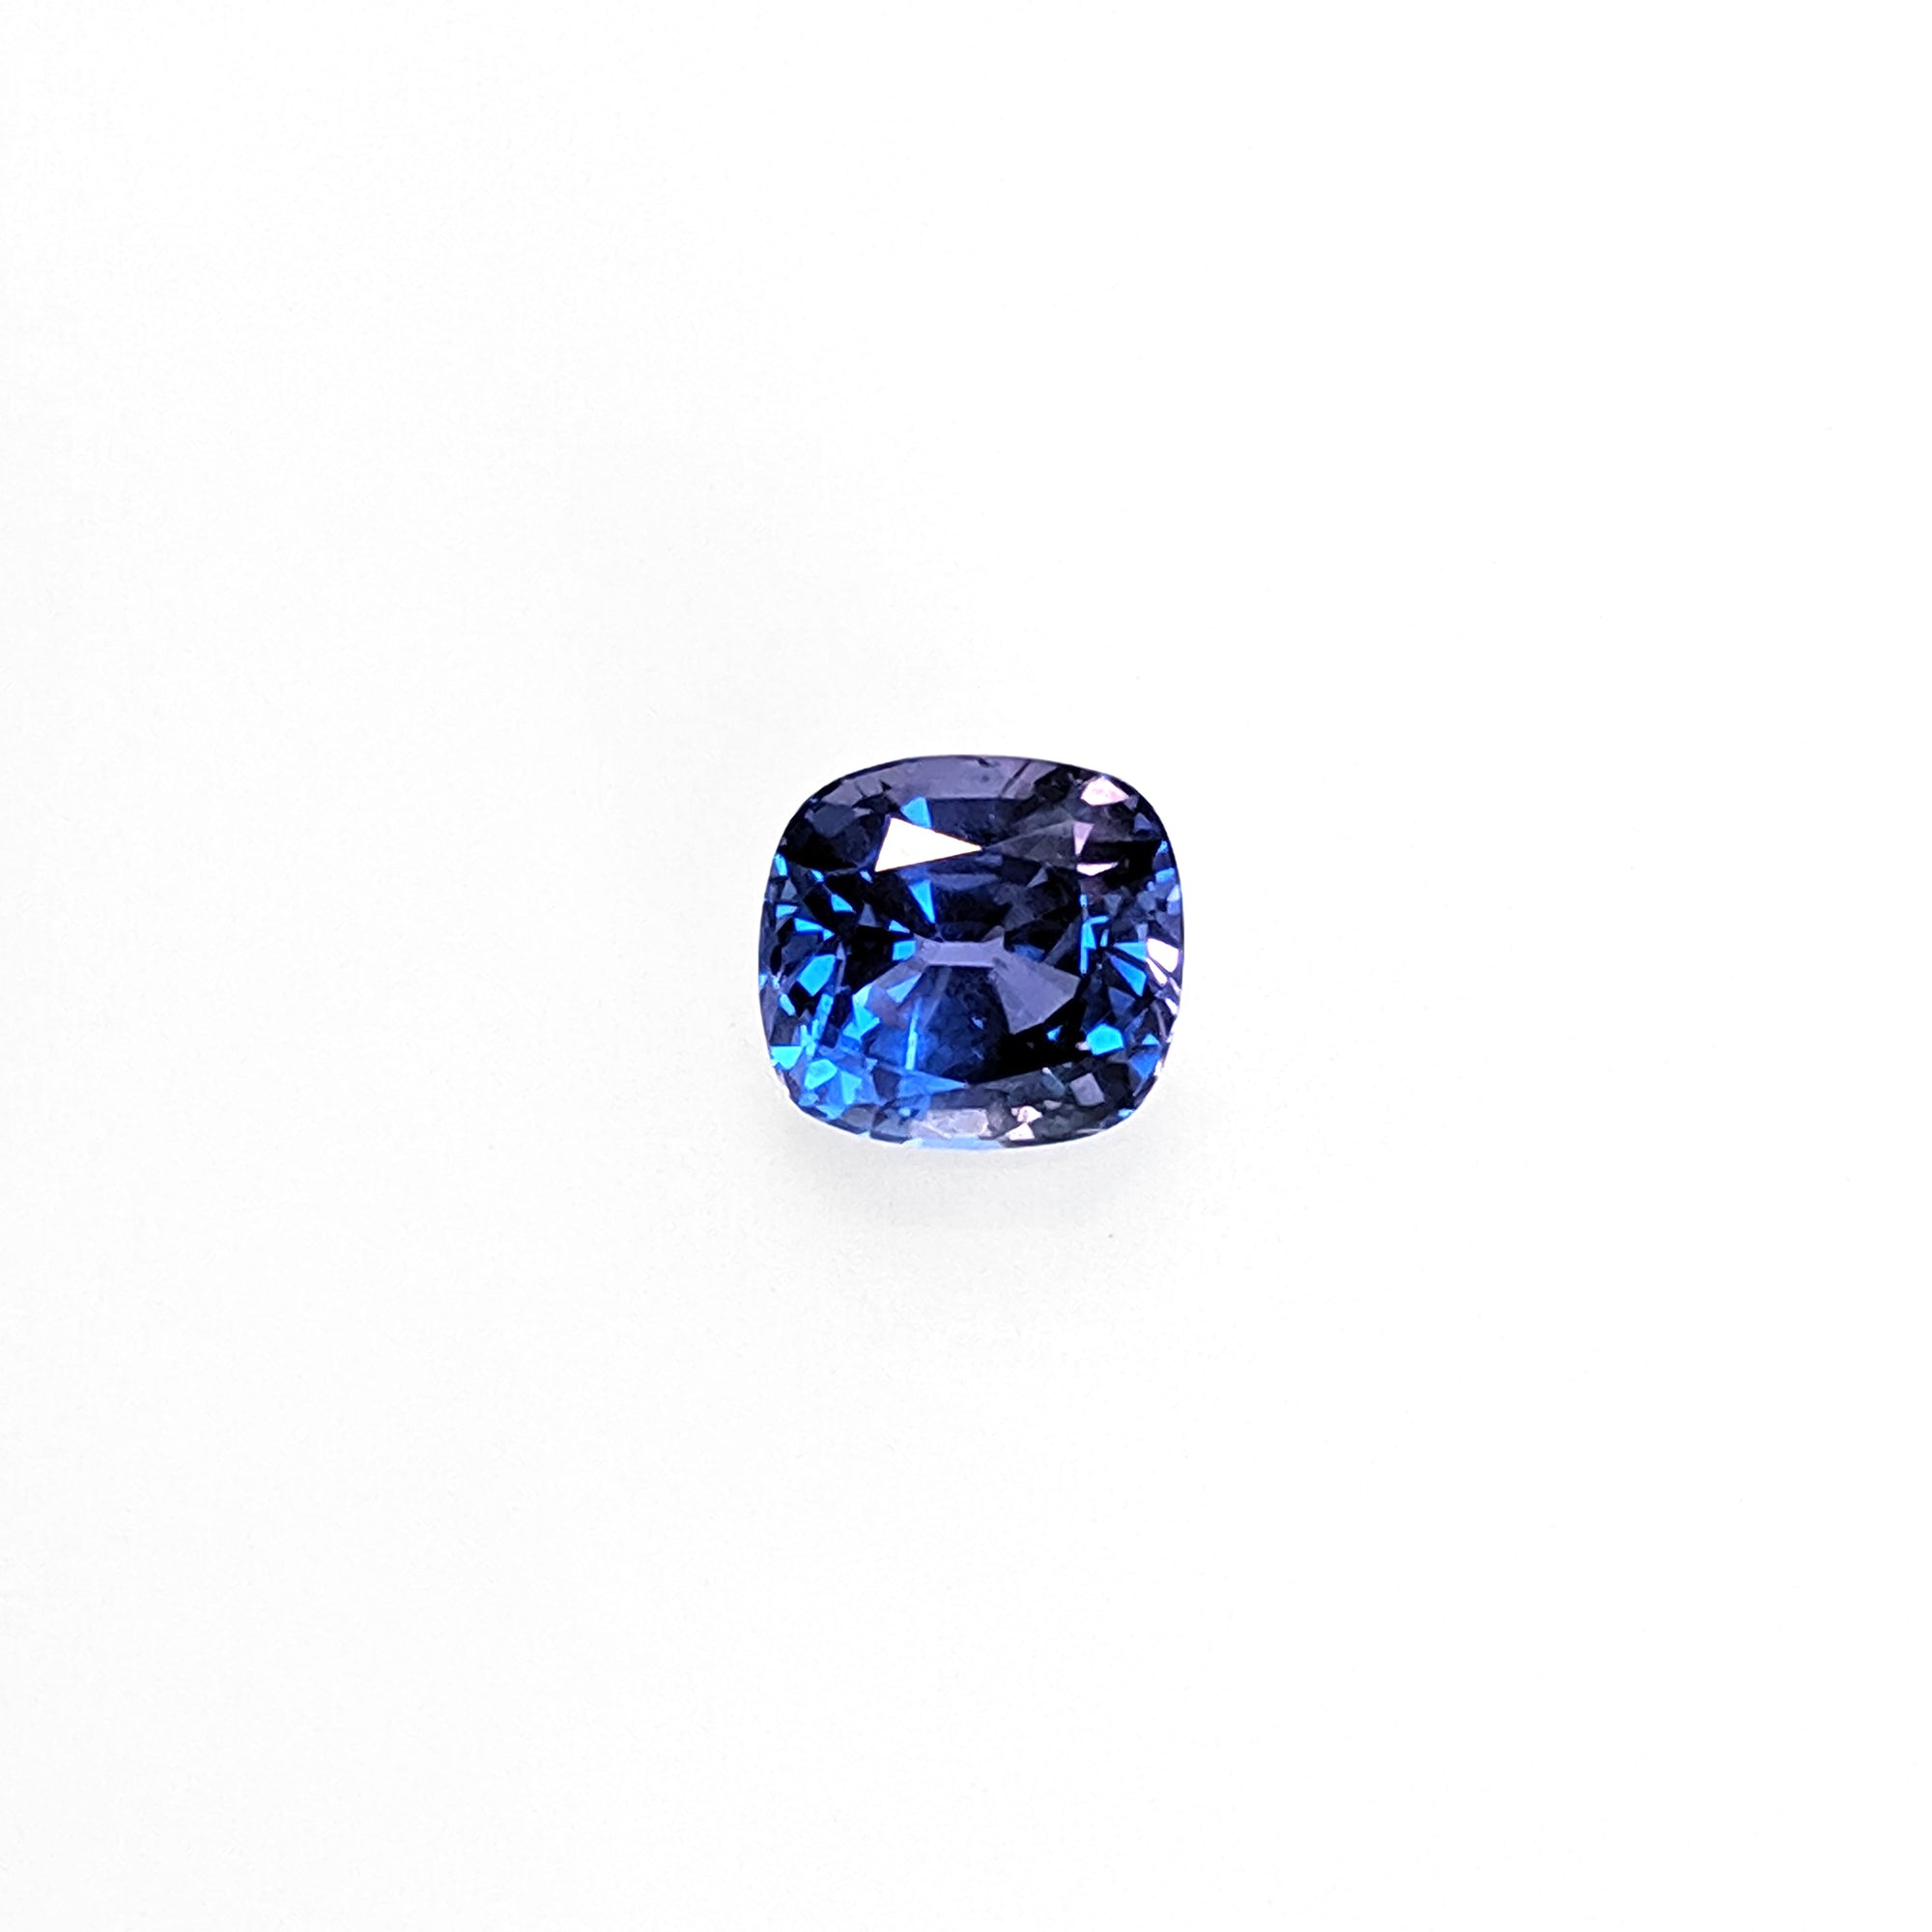 2.35 Carat Blueish-Violet Sapphire